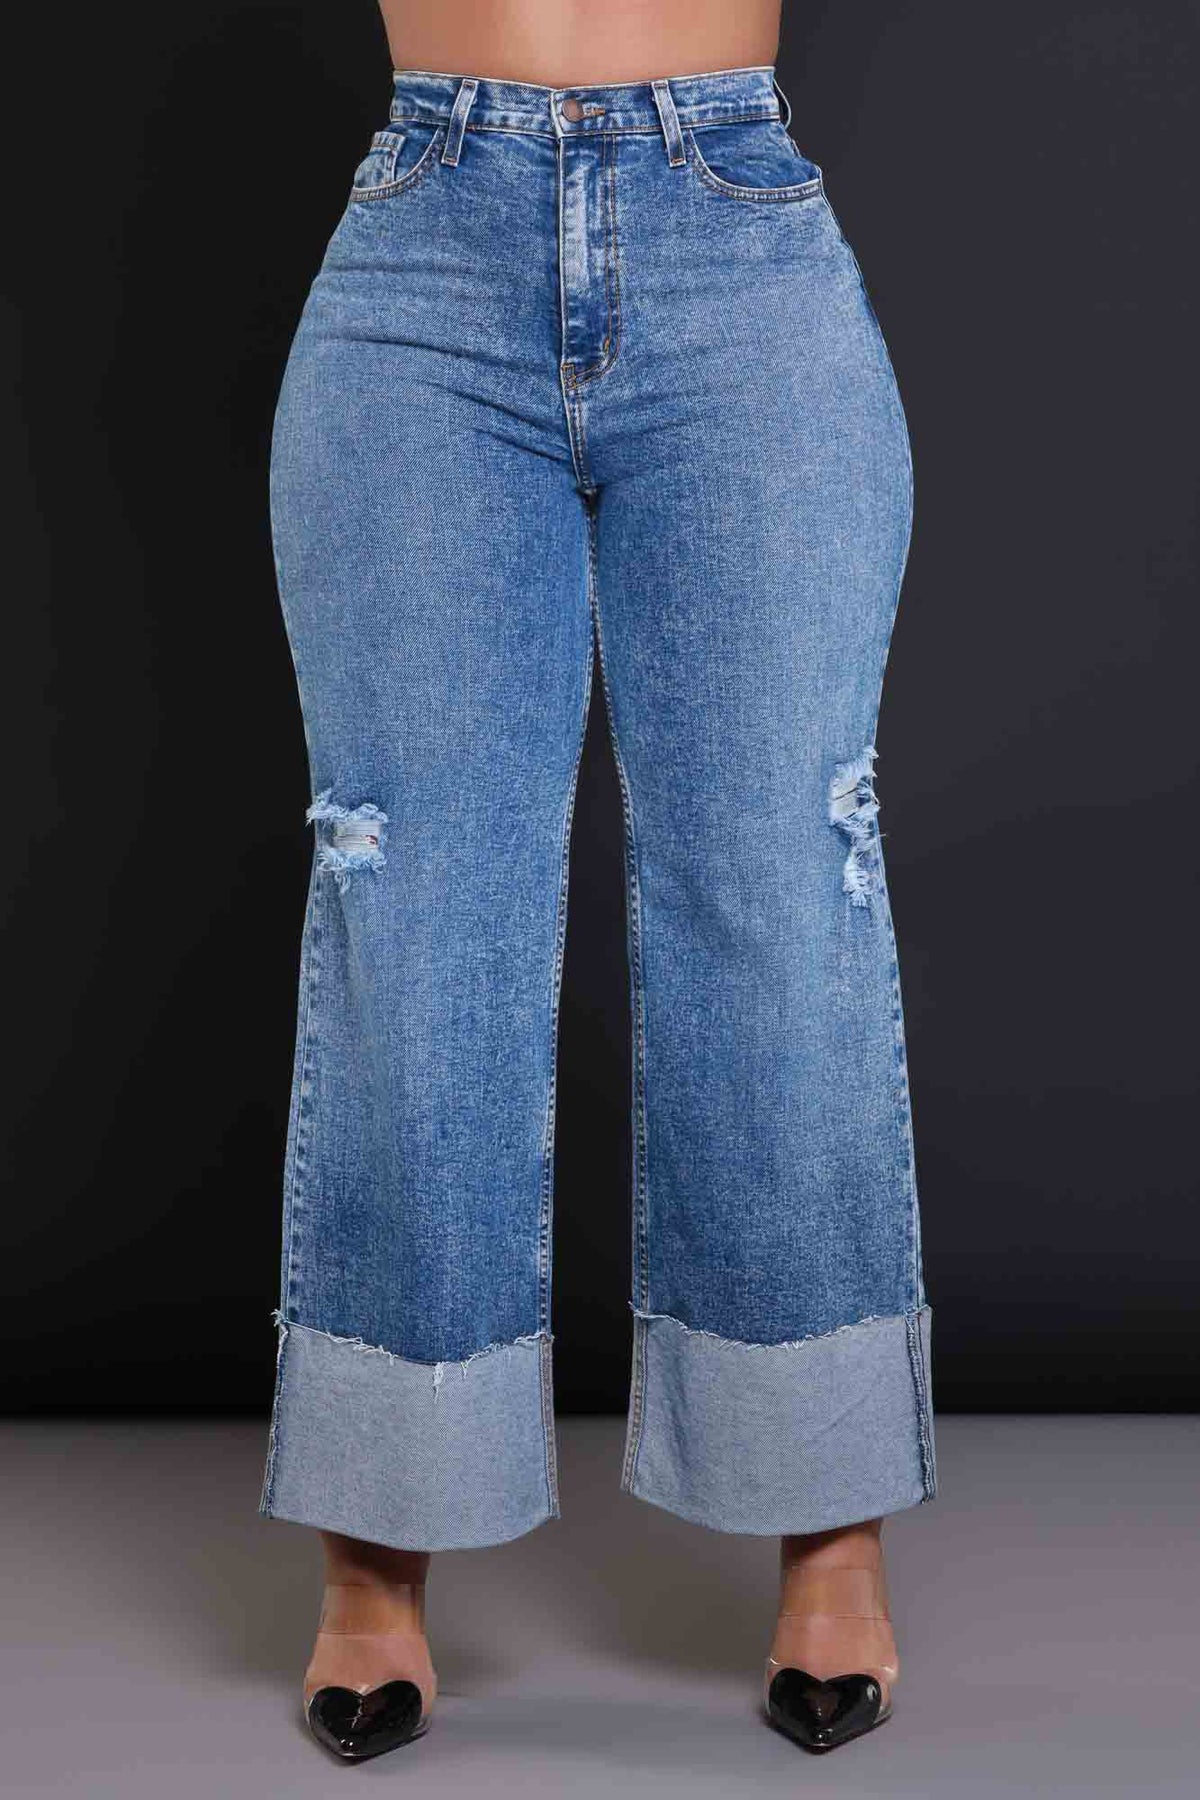 
              Cuffing Season High Waist Stonewash Bootcut Jeans - Medium Wash - Swank A Posh
            